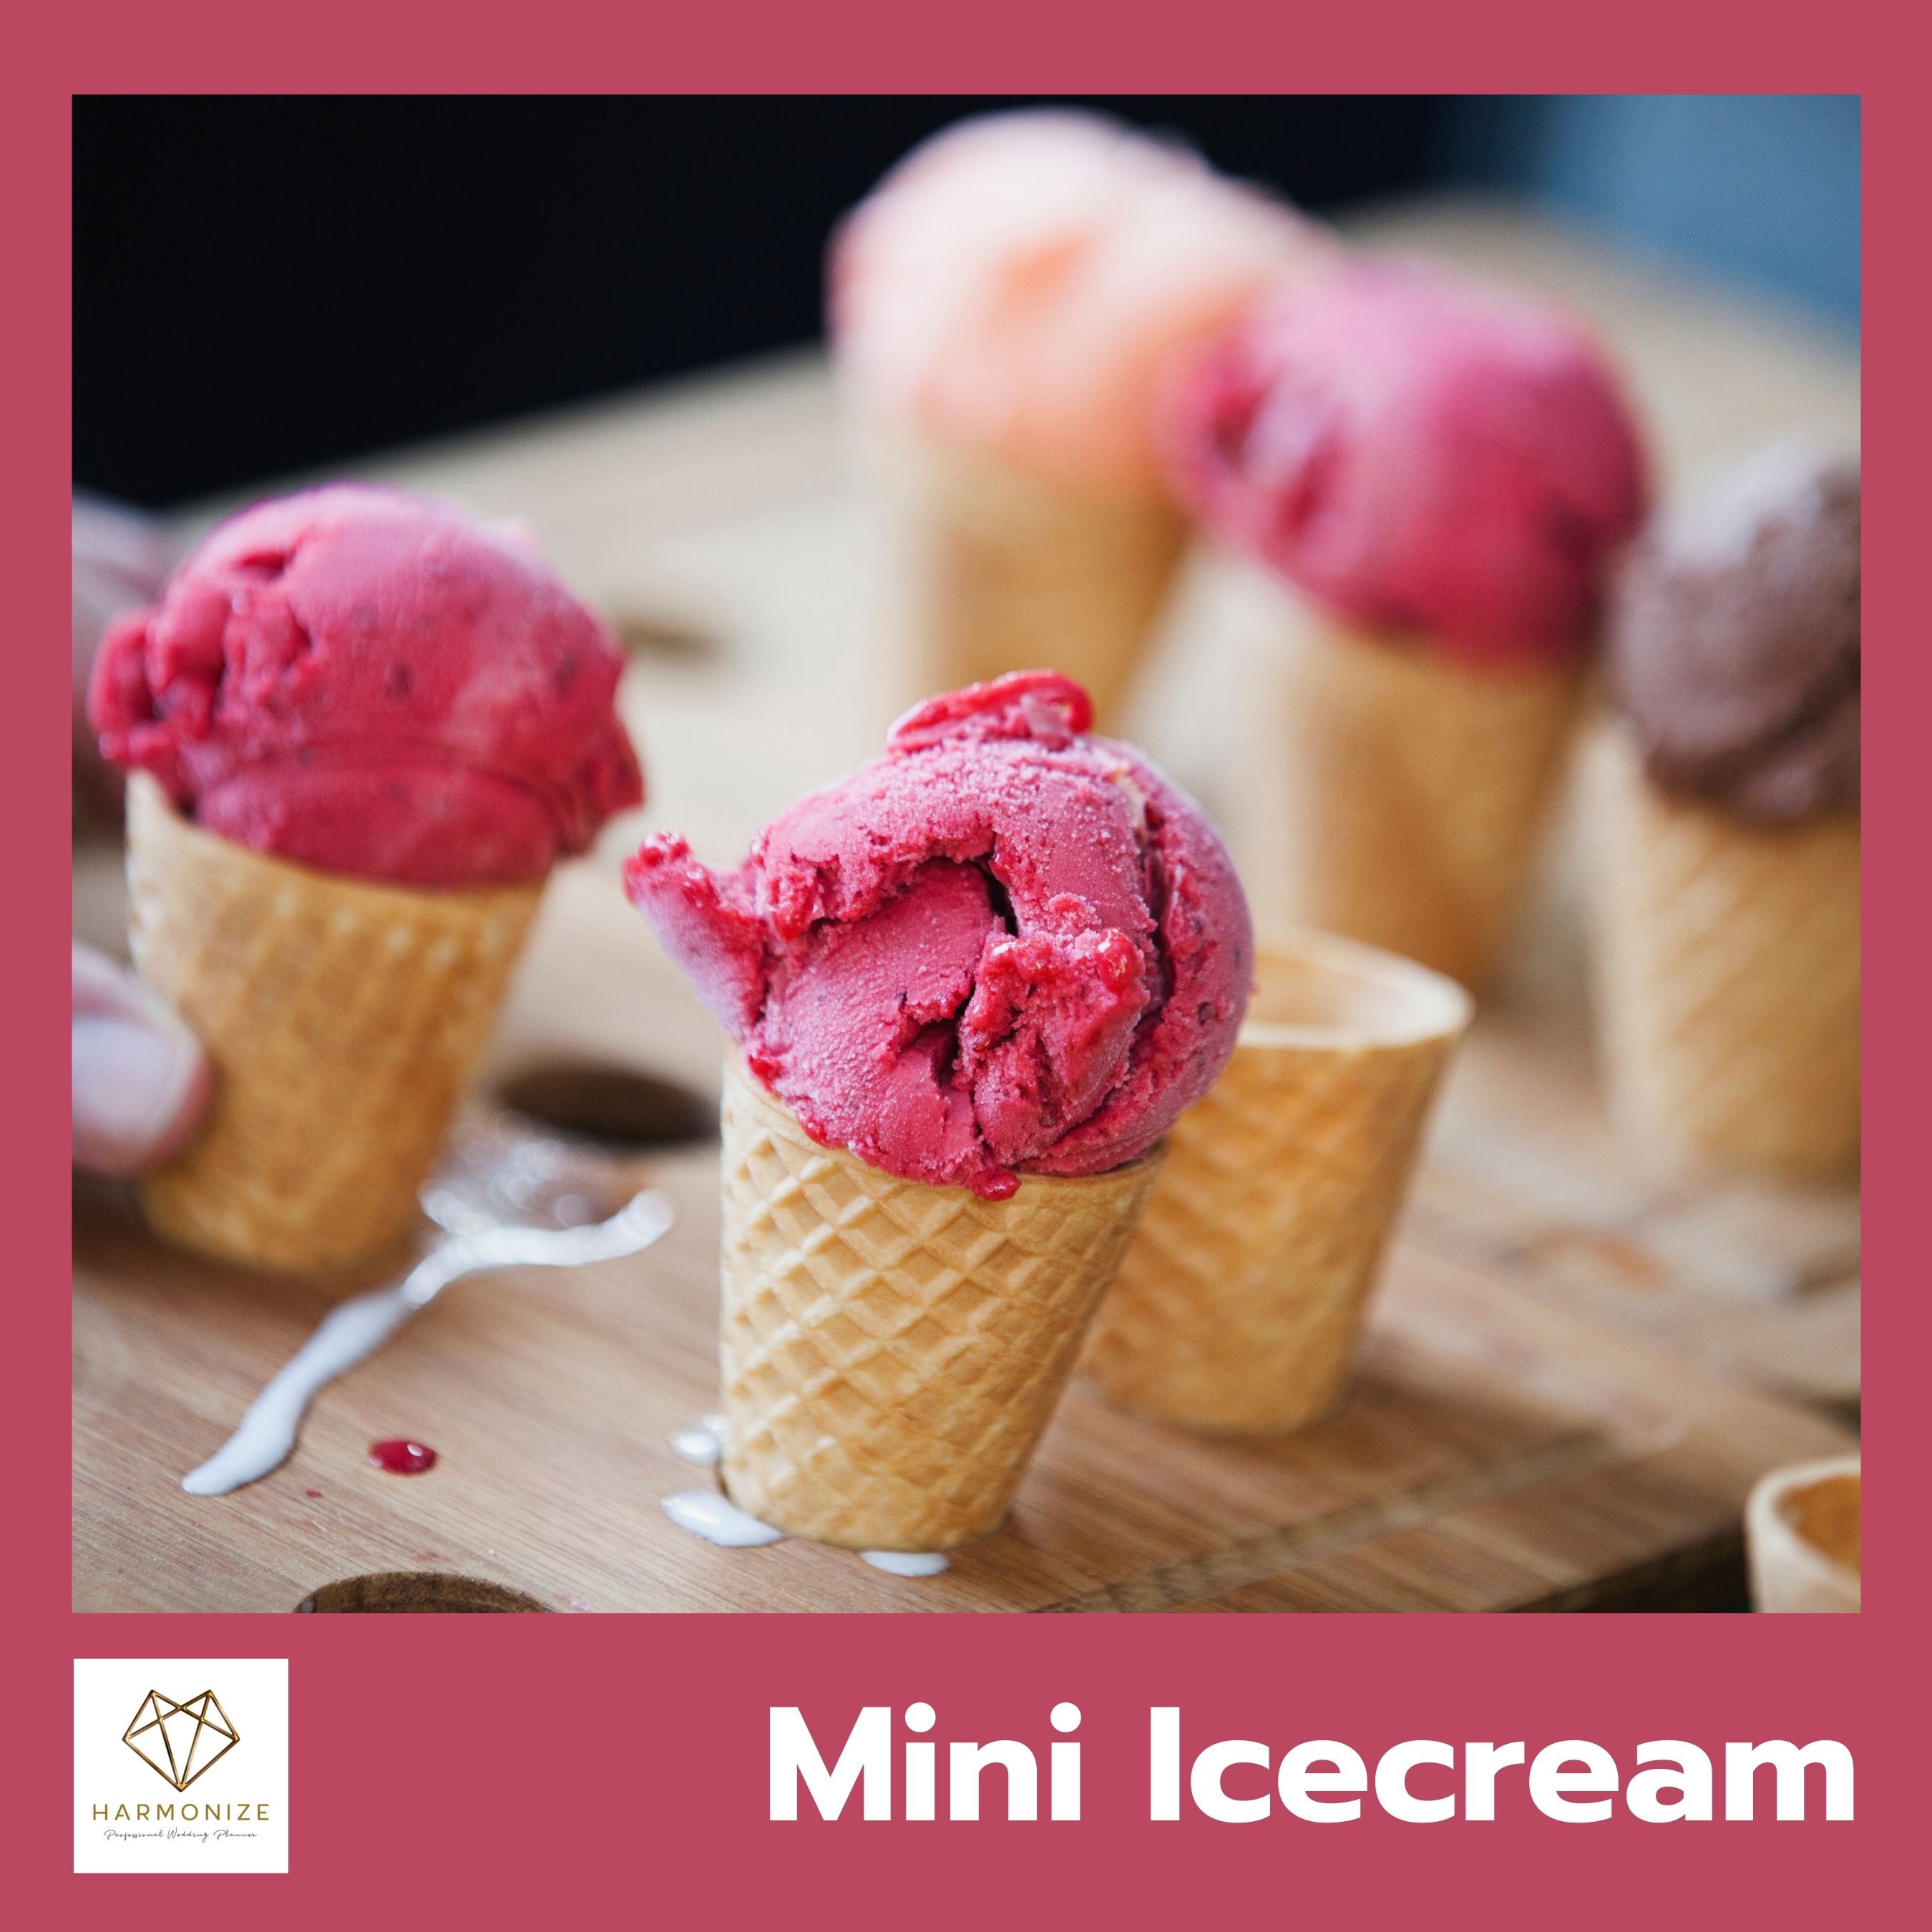 Mini Icecream - ไอเดียสุดเก๋ สำหรับ "อาหาร" Wedding & Party